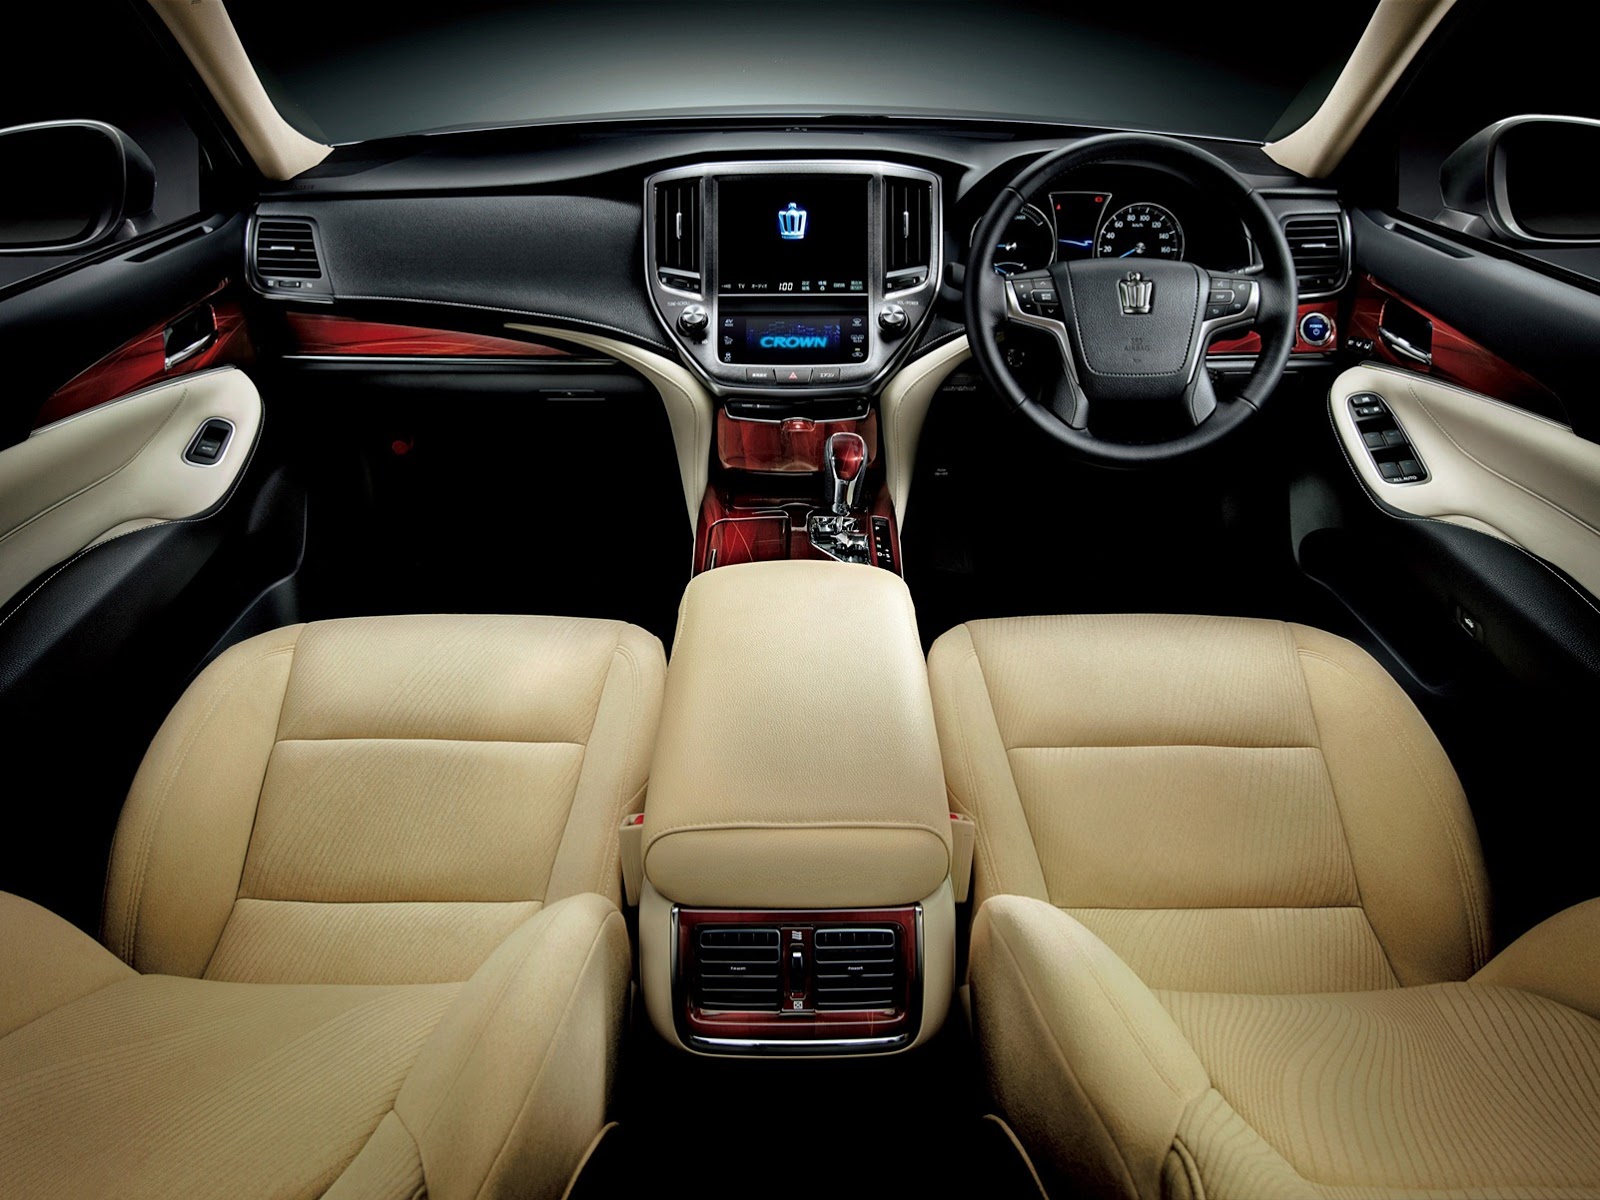 Toyota Crown Interior Dashboard - Front Cabin